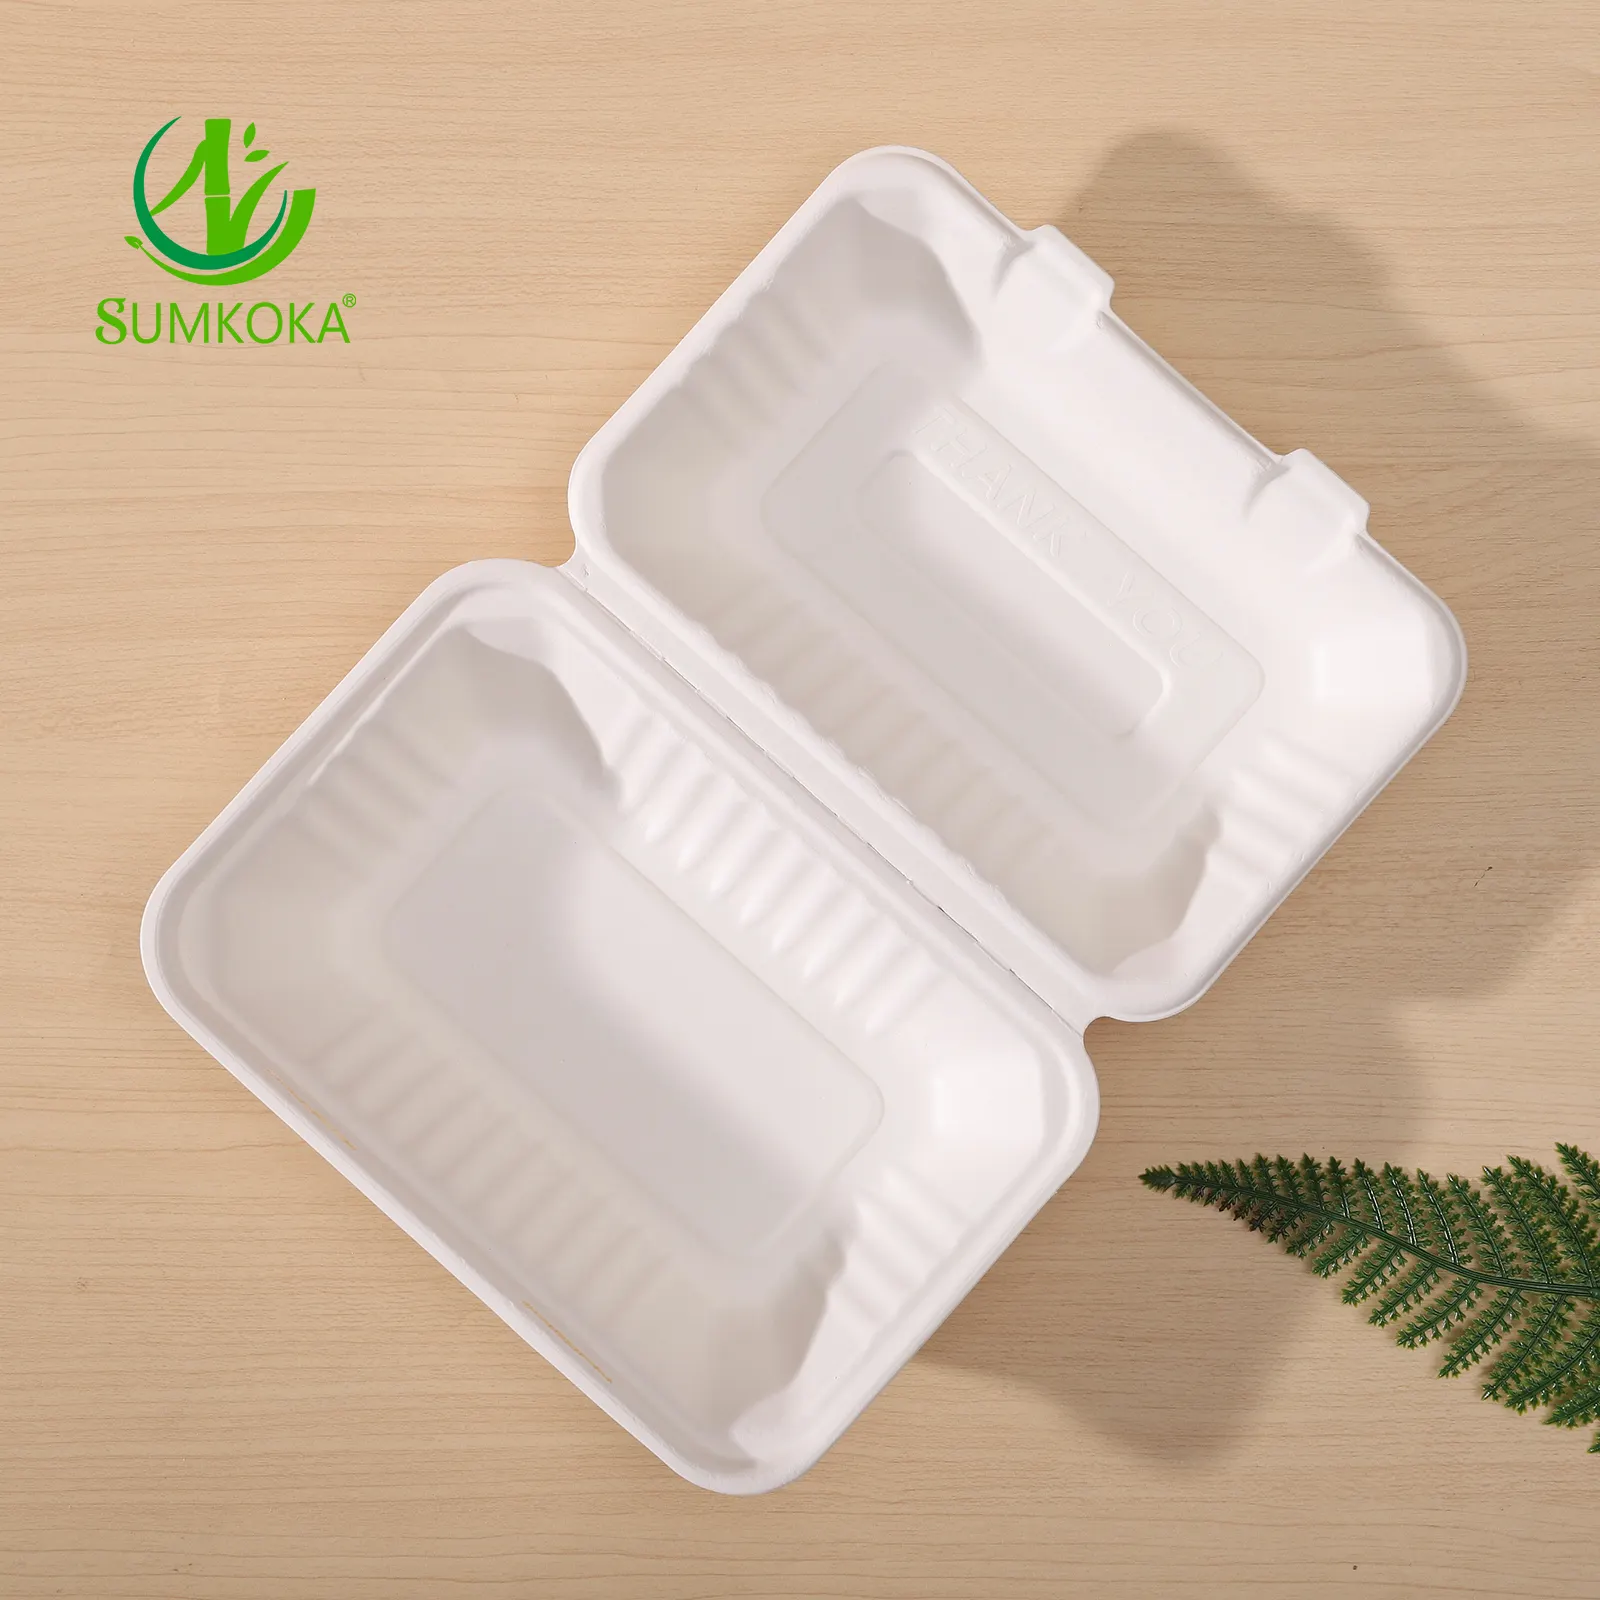 SUMKOKAPFASフリー生分解性堆肥化可能バガスパルプフードクラムシェルランチボックス持ち帰り用食品包装バガスボックス